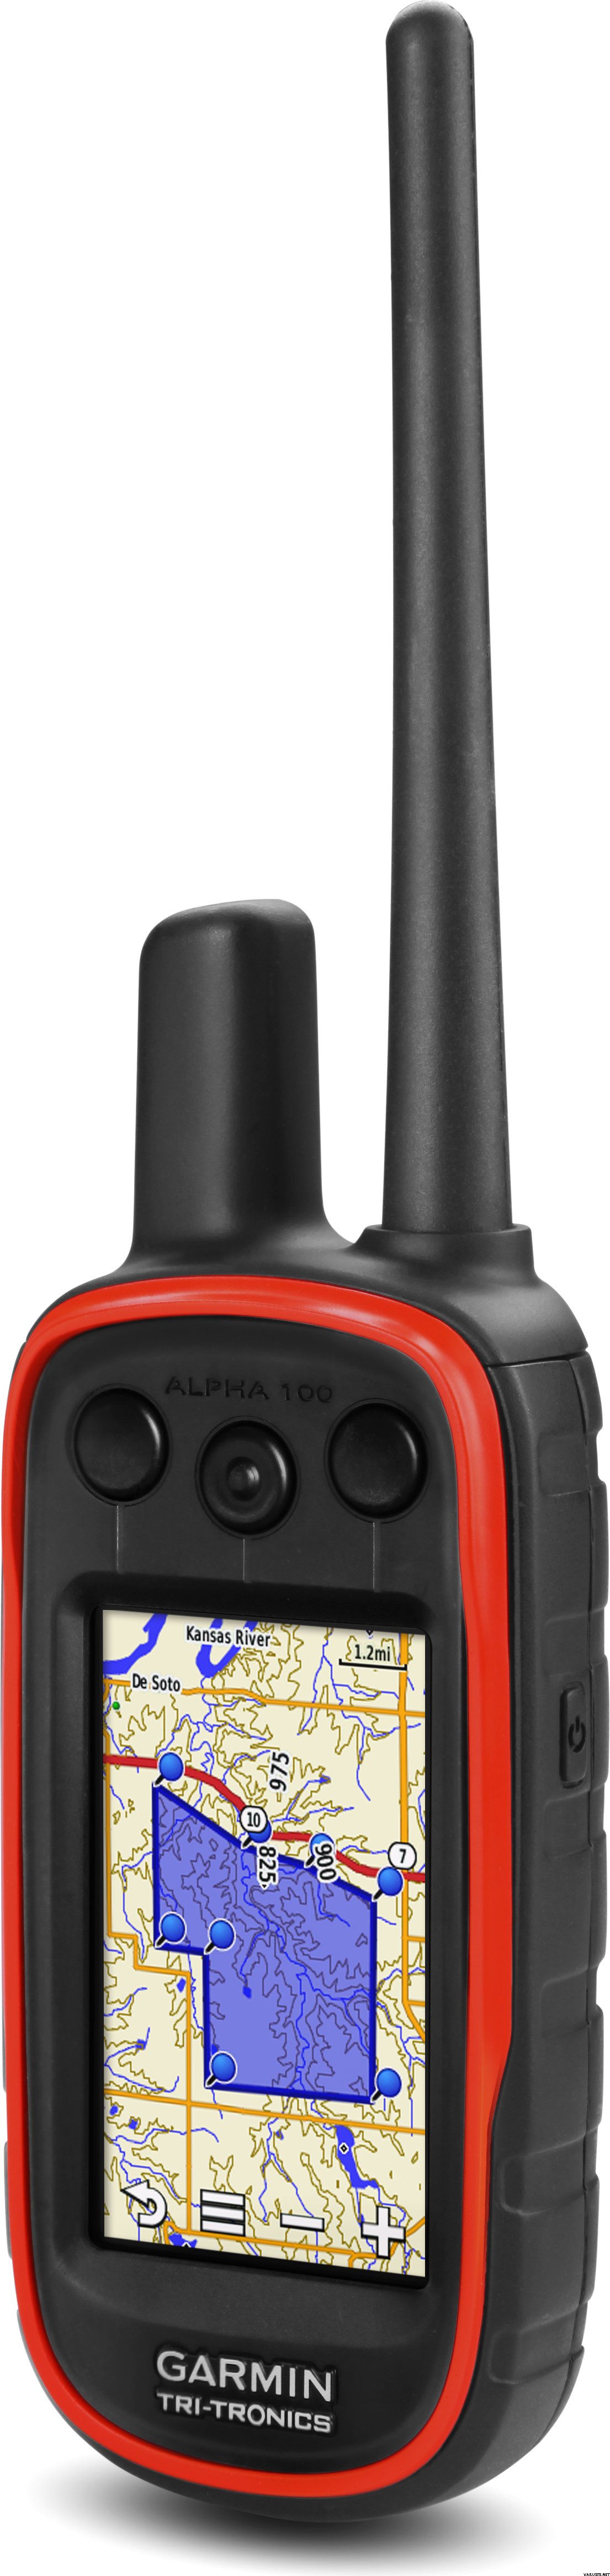 alpha 100 t5